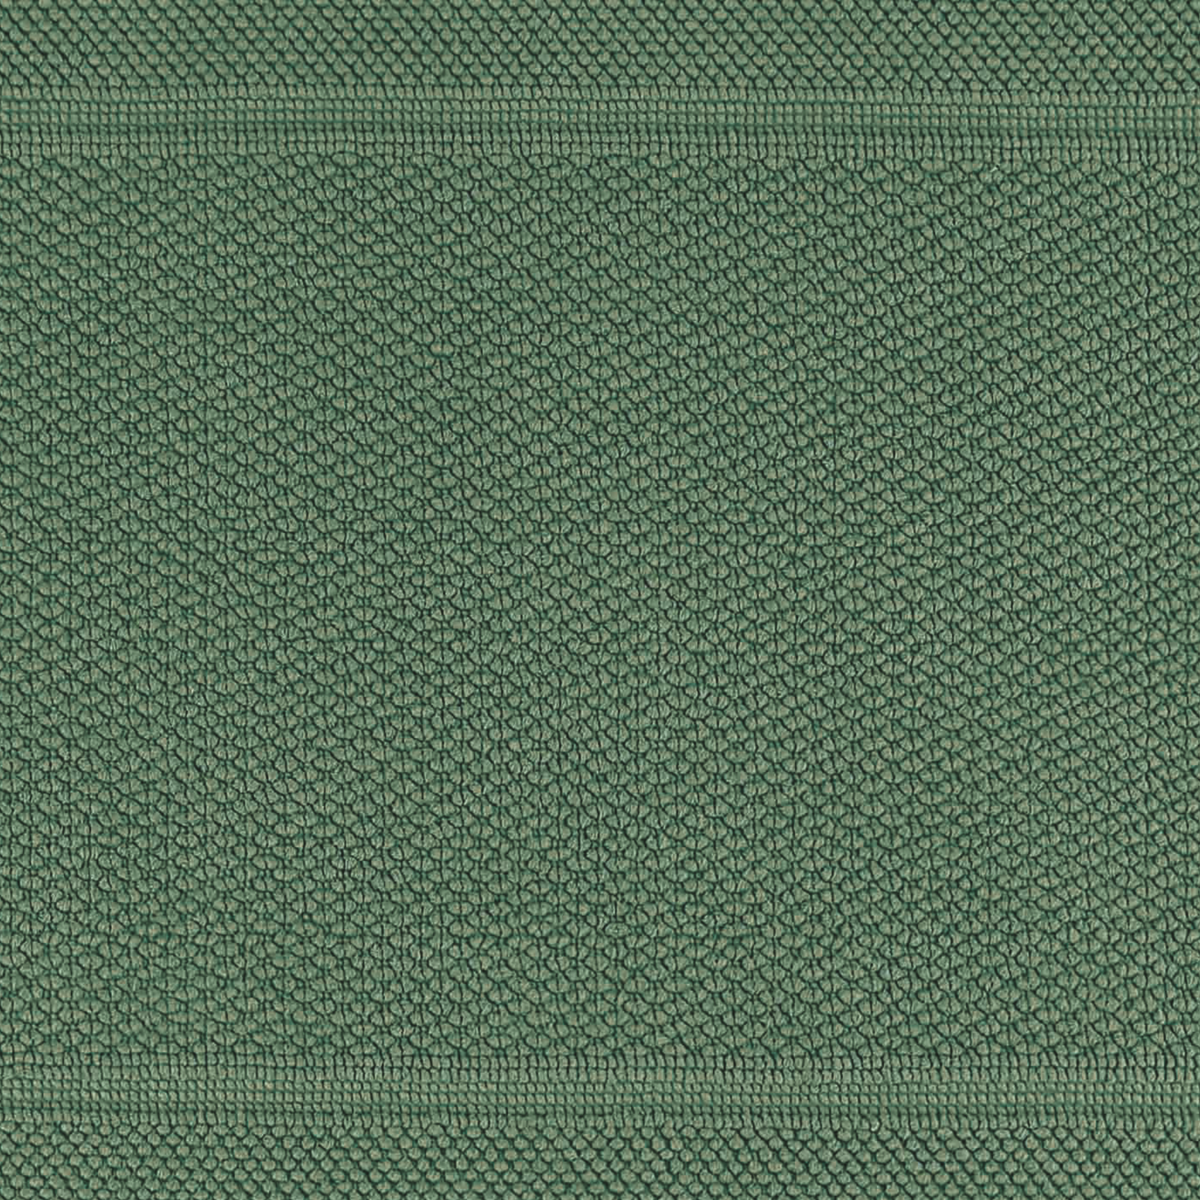 Fabric Closeup of Graccioza Bee Waffle Woven Bath Mat in Jade Color